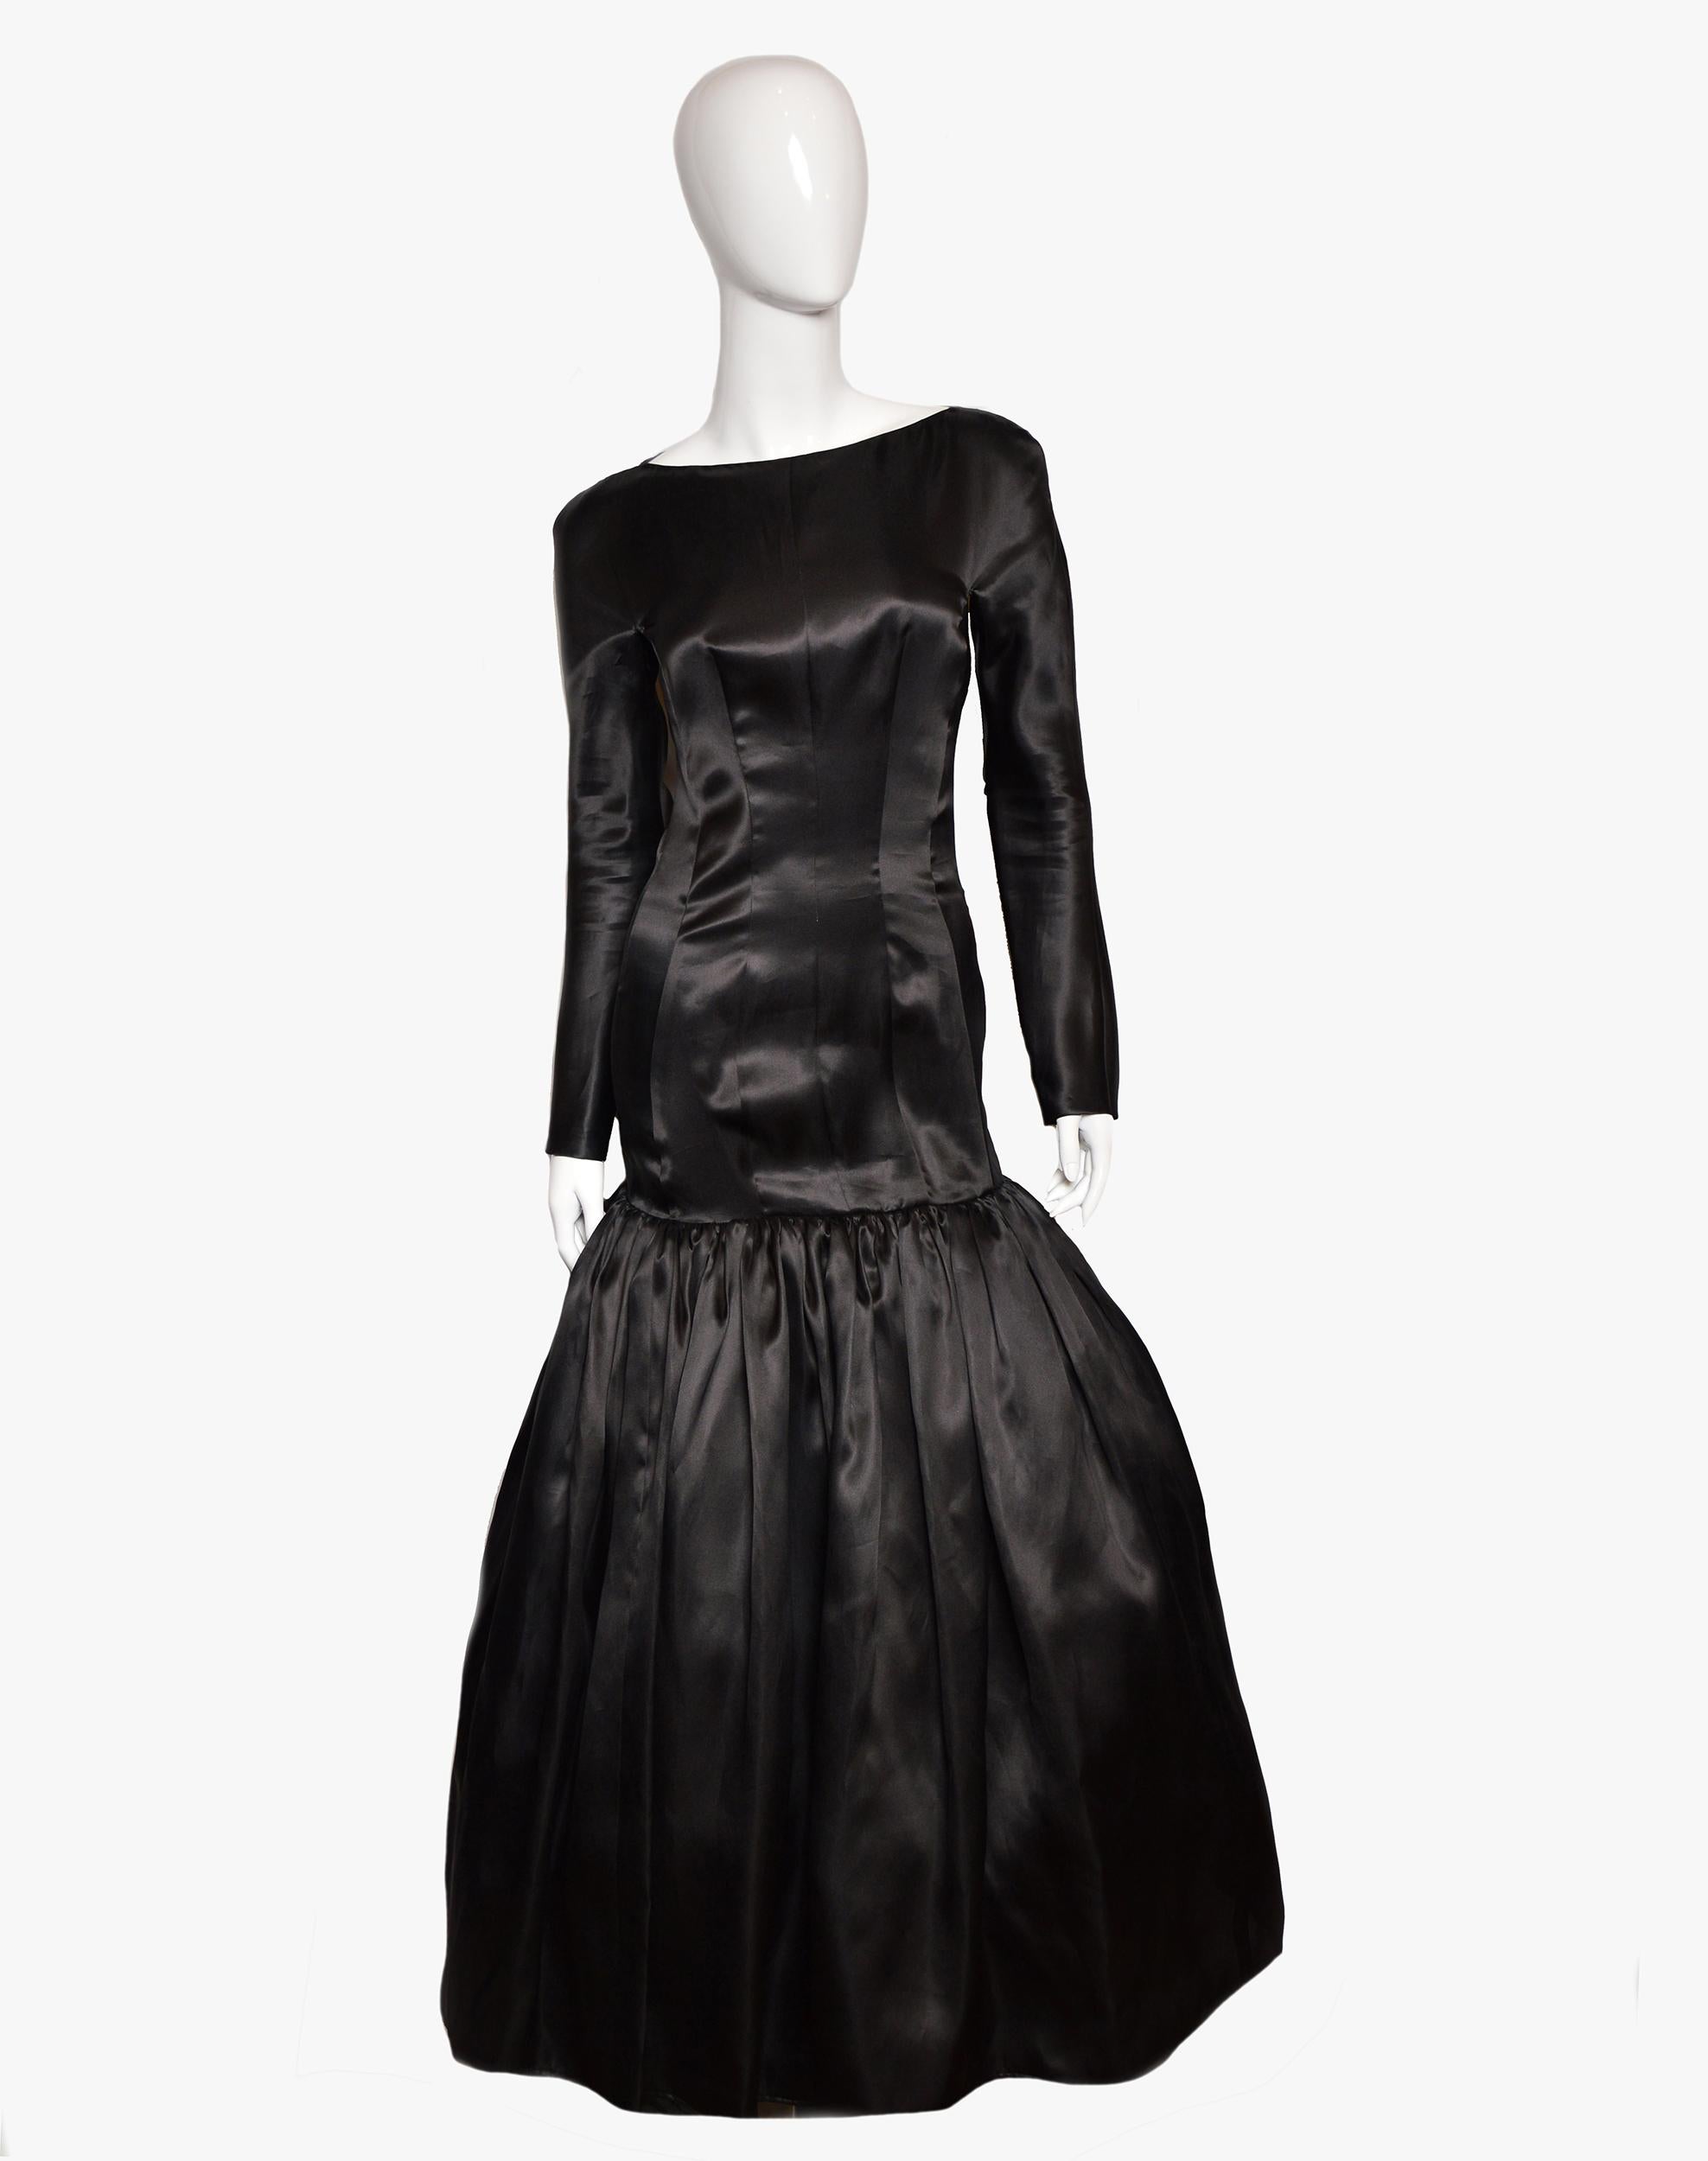 Mila Schon Couture Evening Black Dress, 1980s For Sale